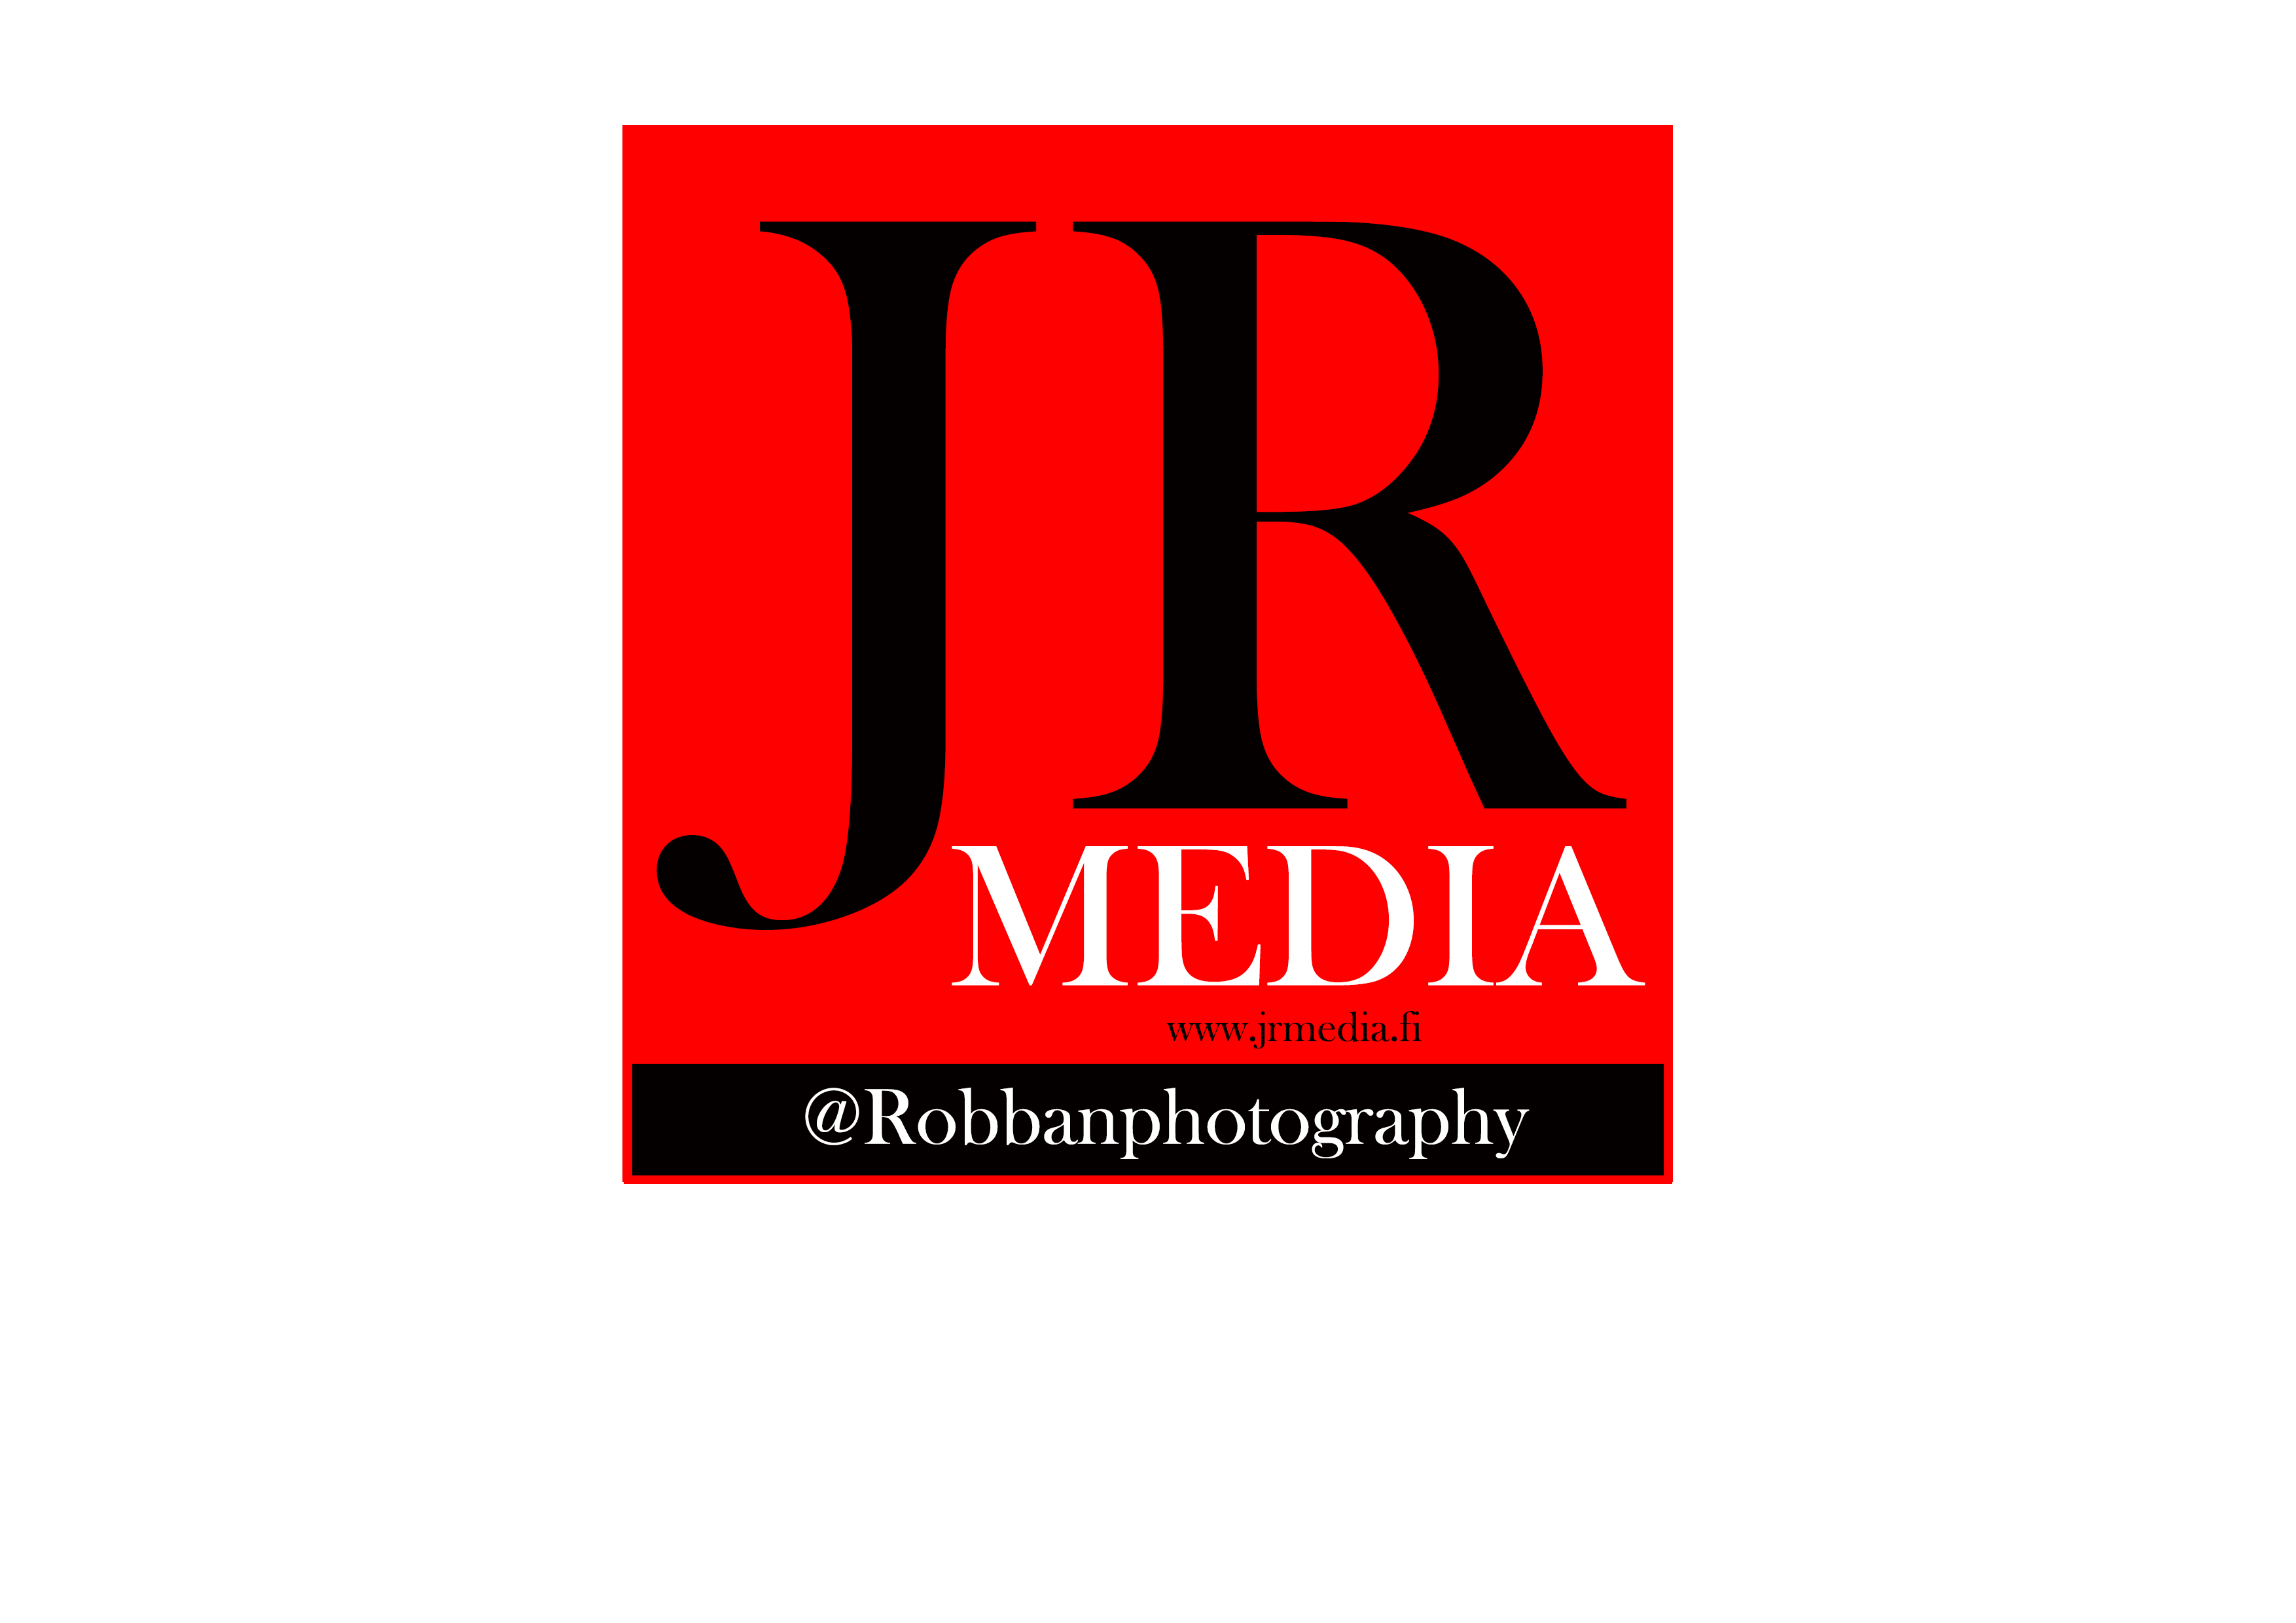 JR-Media / @Robbanphotography